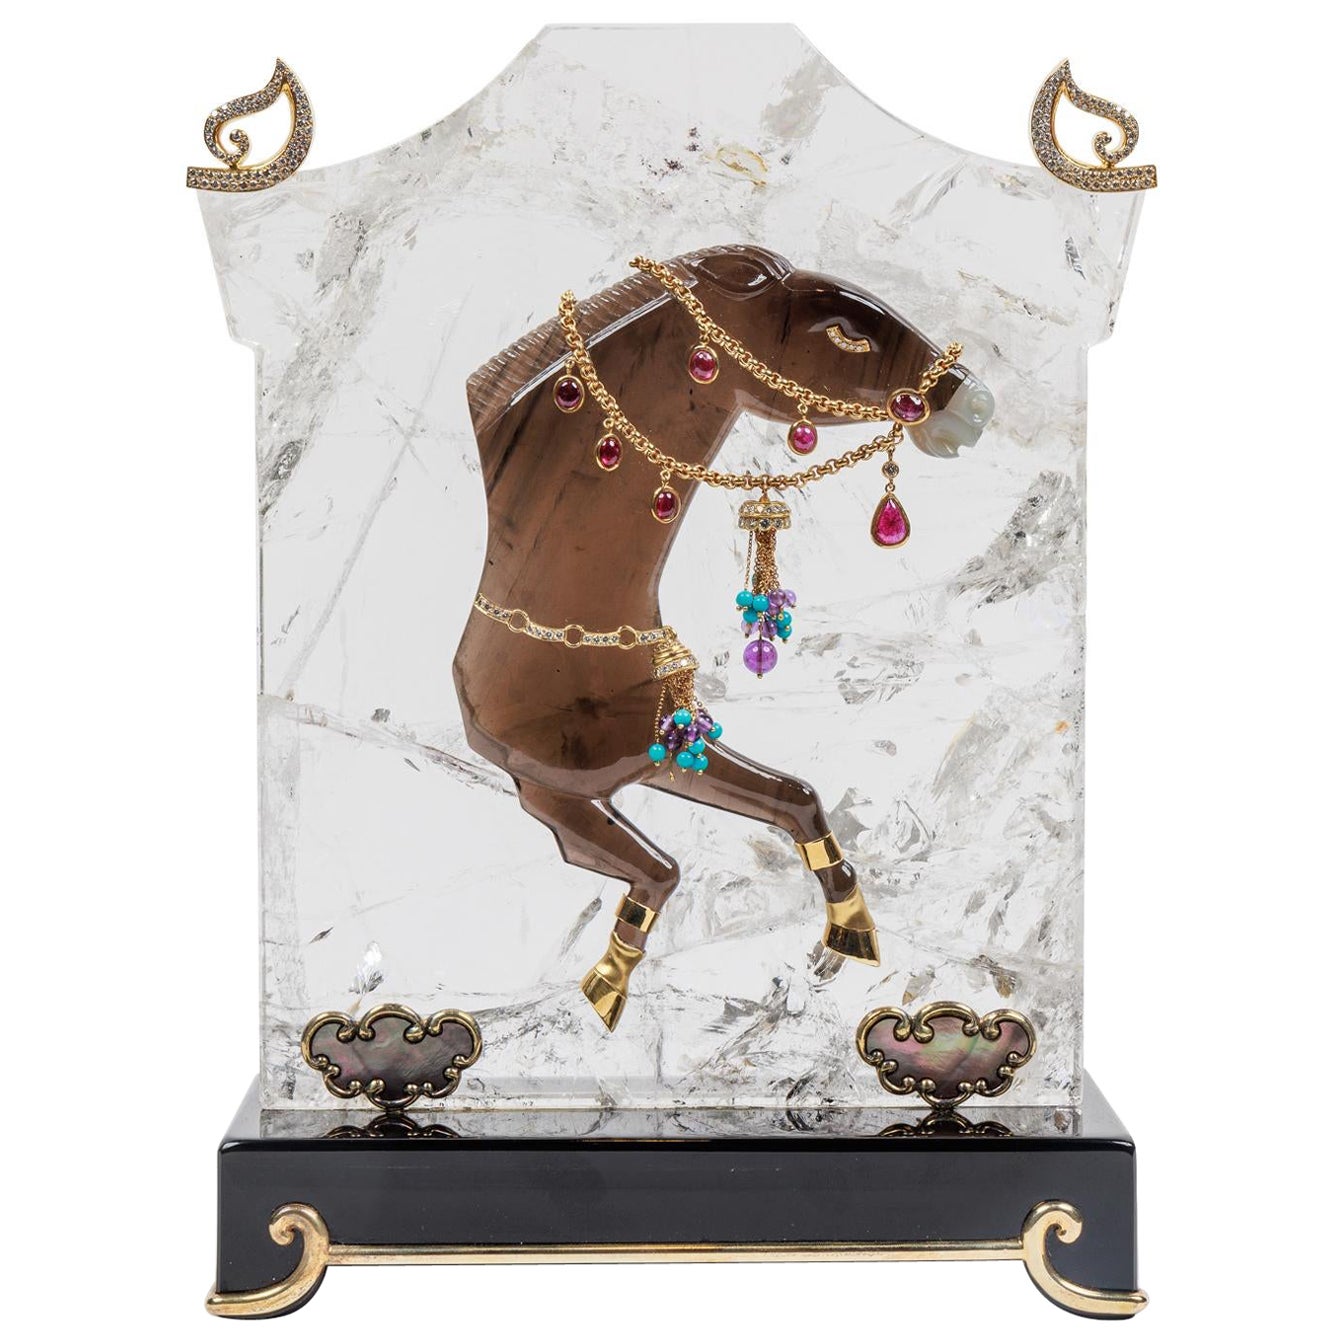 Mellerio Paris, A French Gold, Diamonds, Silver, and Smoky Quartz Carved Horse For Sale